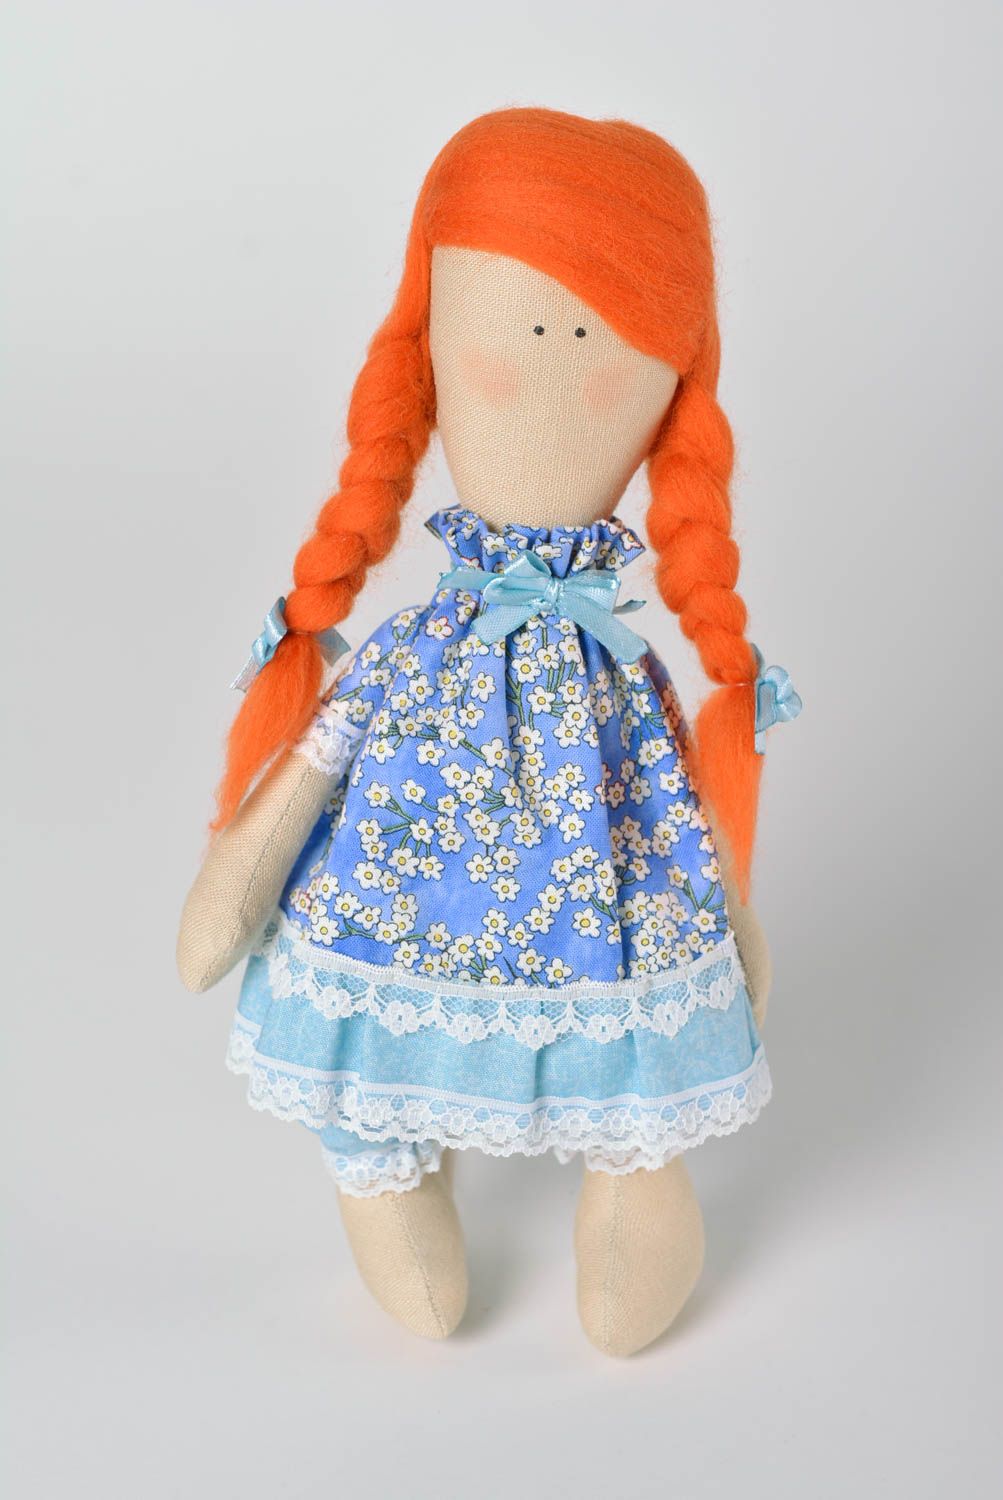 Handmade fabric doll decorative stuffed toy present for children nursery decor photo 1